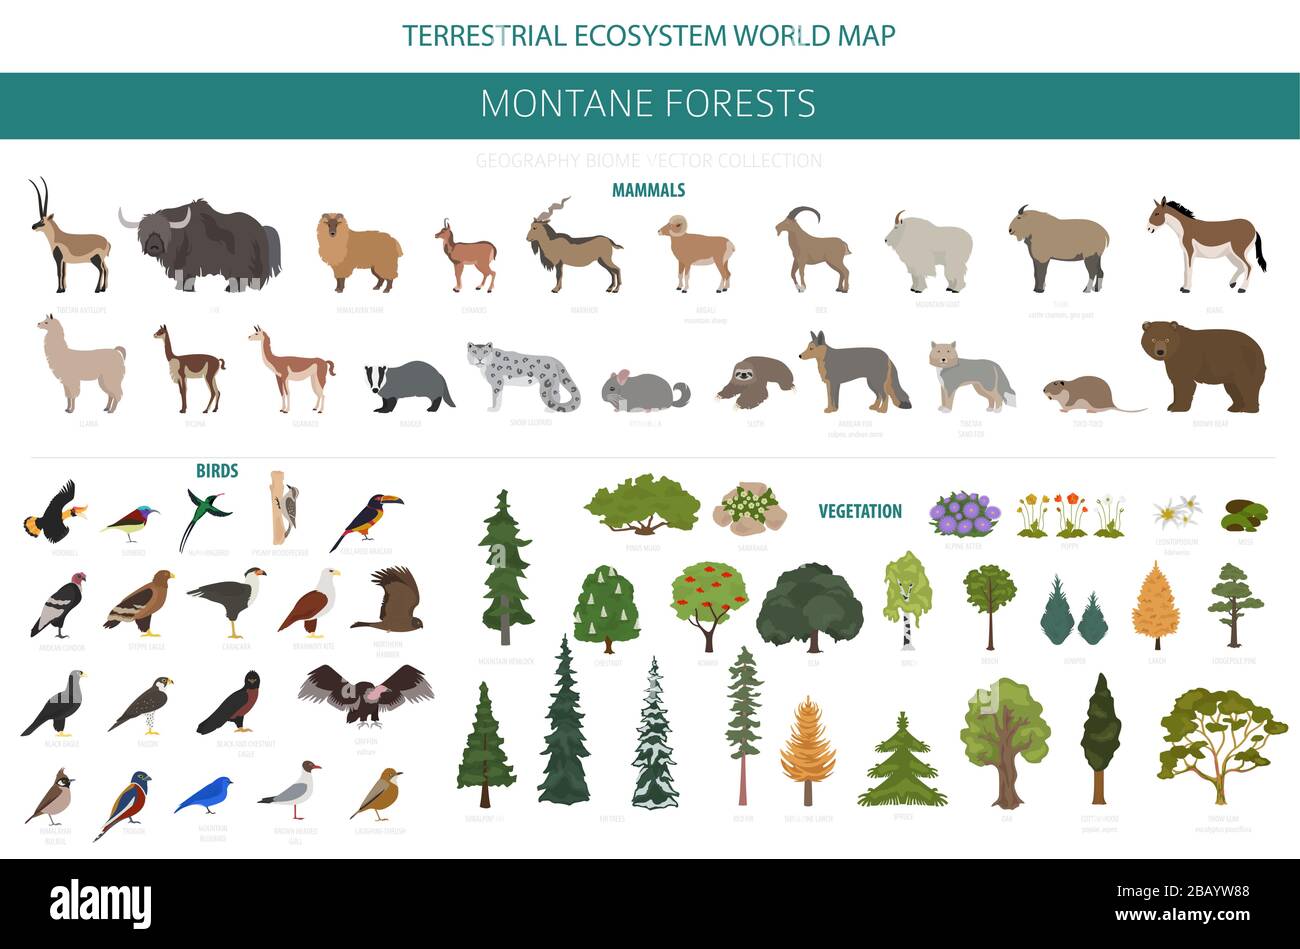 Montane forest biome, natural region infographic. Terrestrial ecosystem world map. Animals, birds and vegetations ecosystem design set. Vector illustr Stock Vector